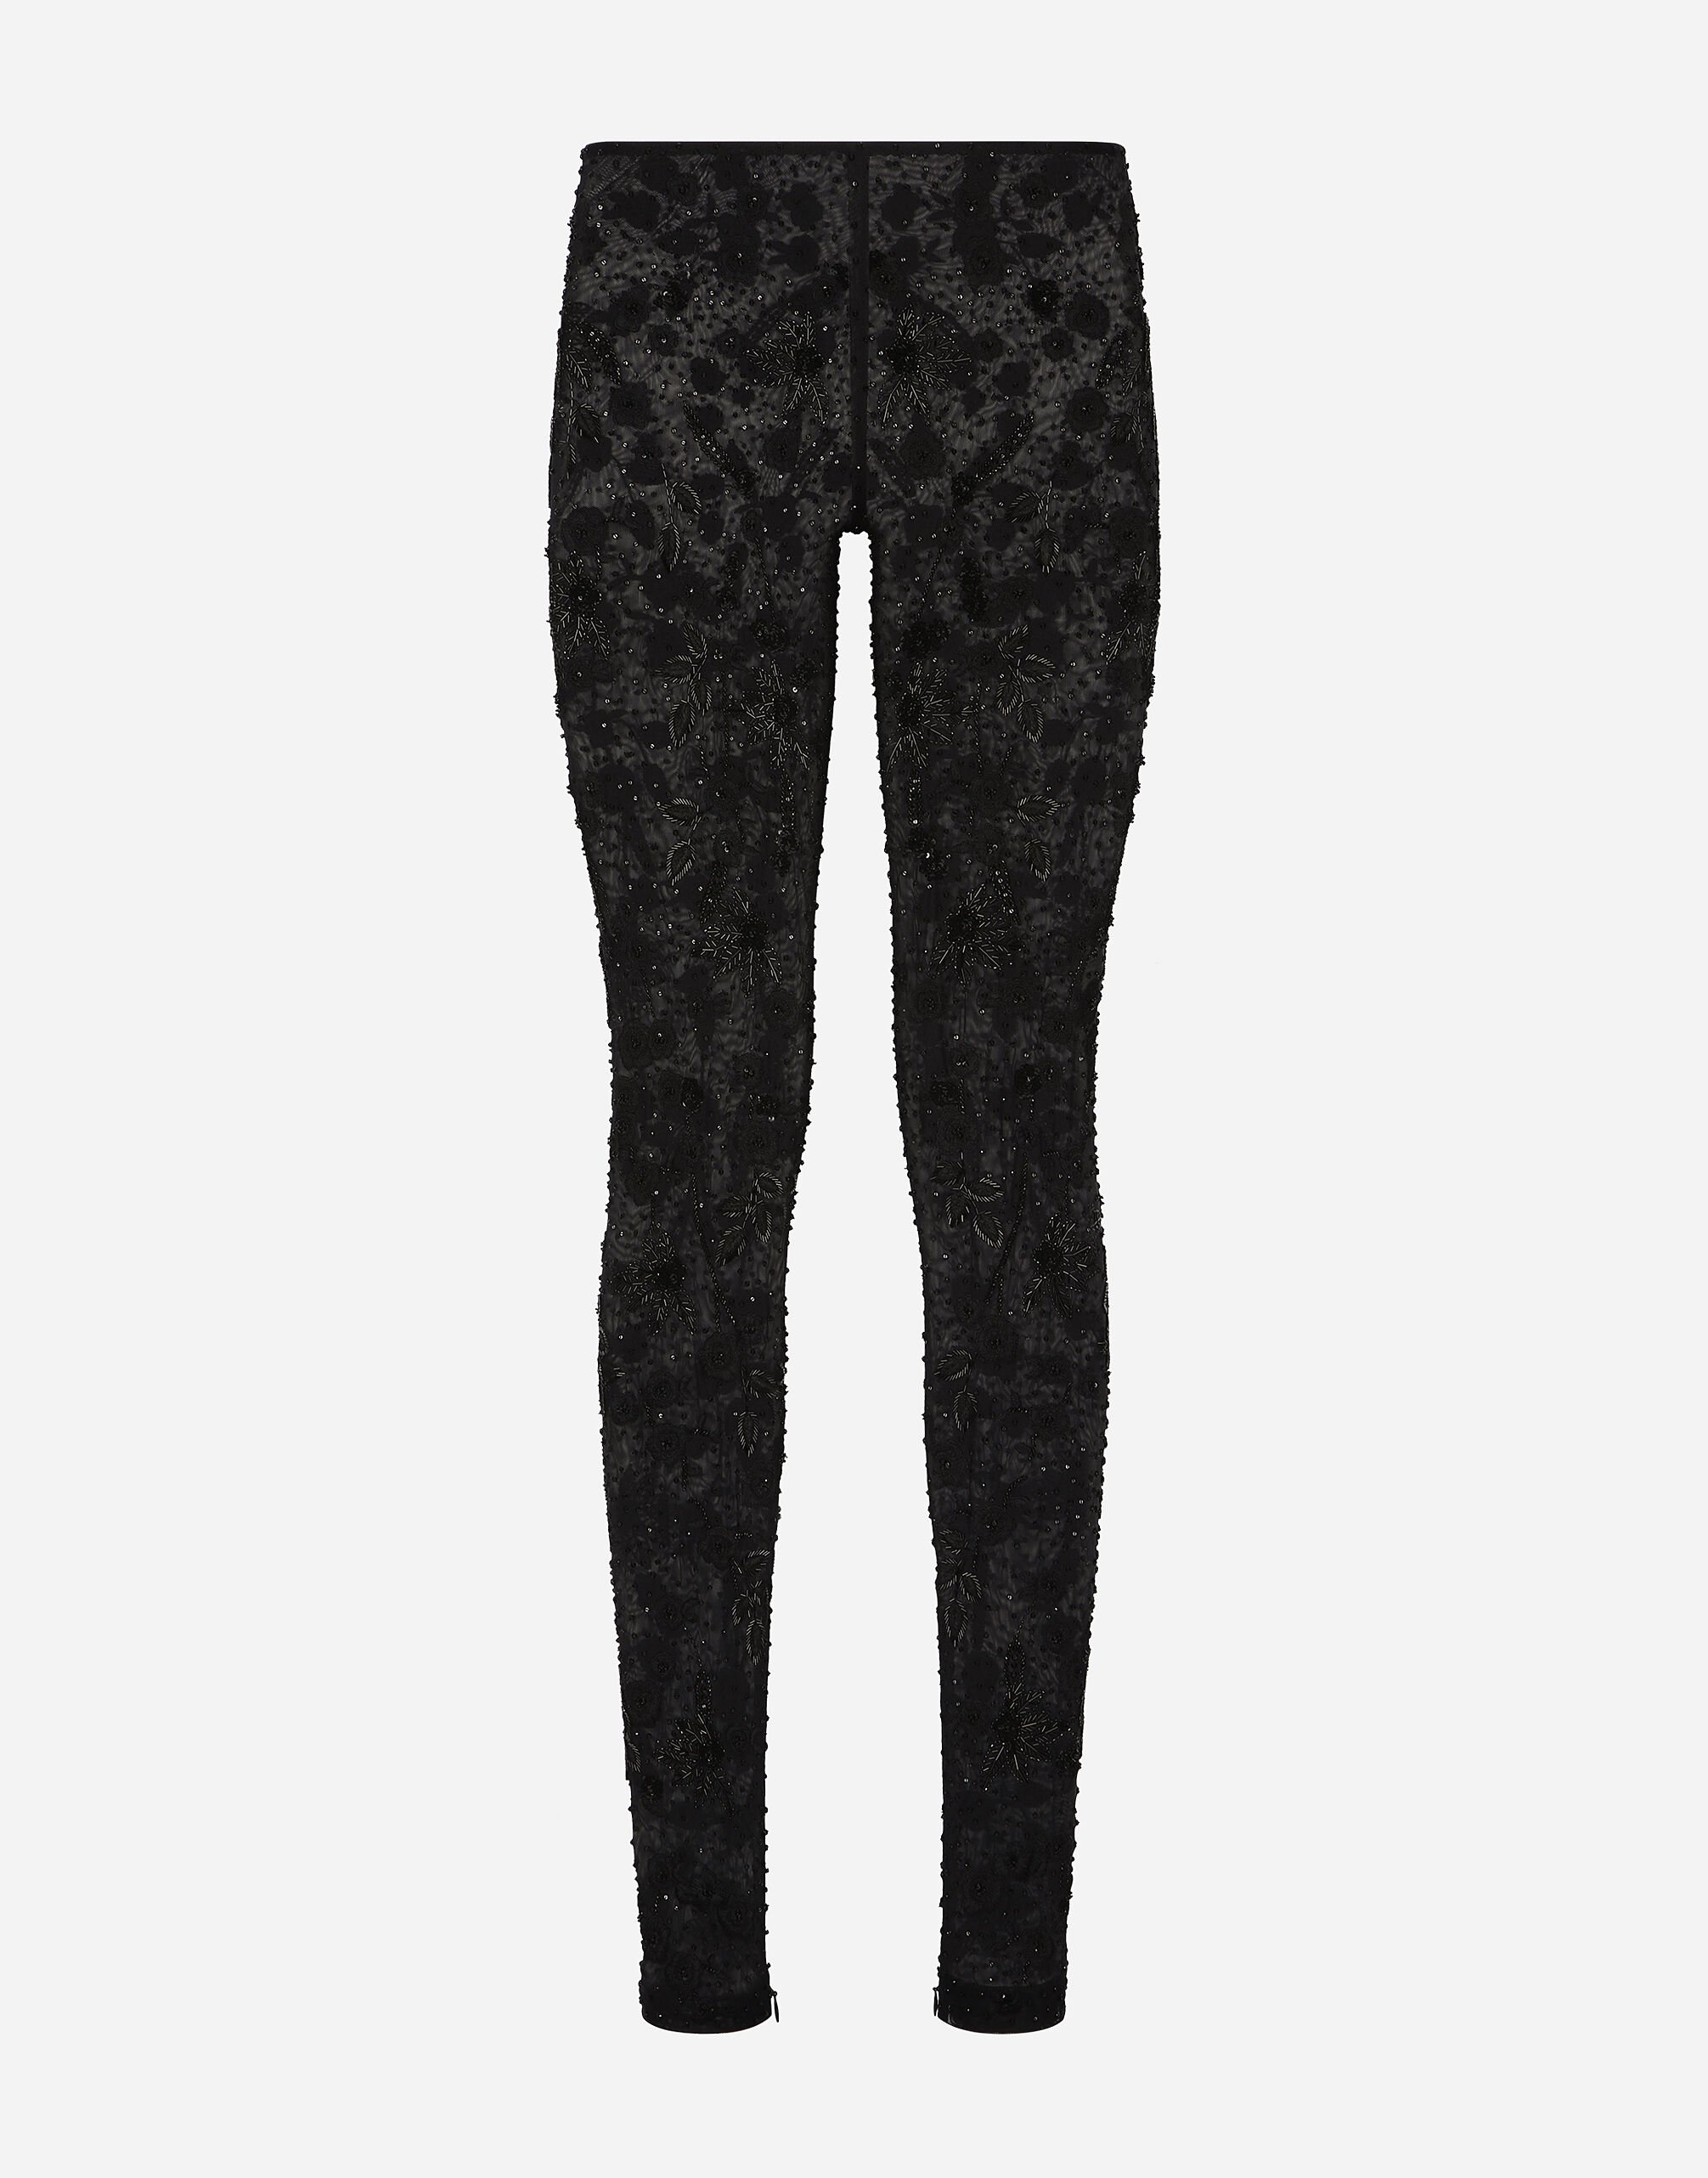 Dolce & Gabbana KIM DOLCE&GABBANA Tulle leggings with embroidery Black FX340ZJAIJ8